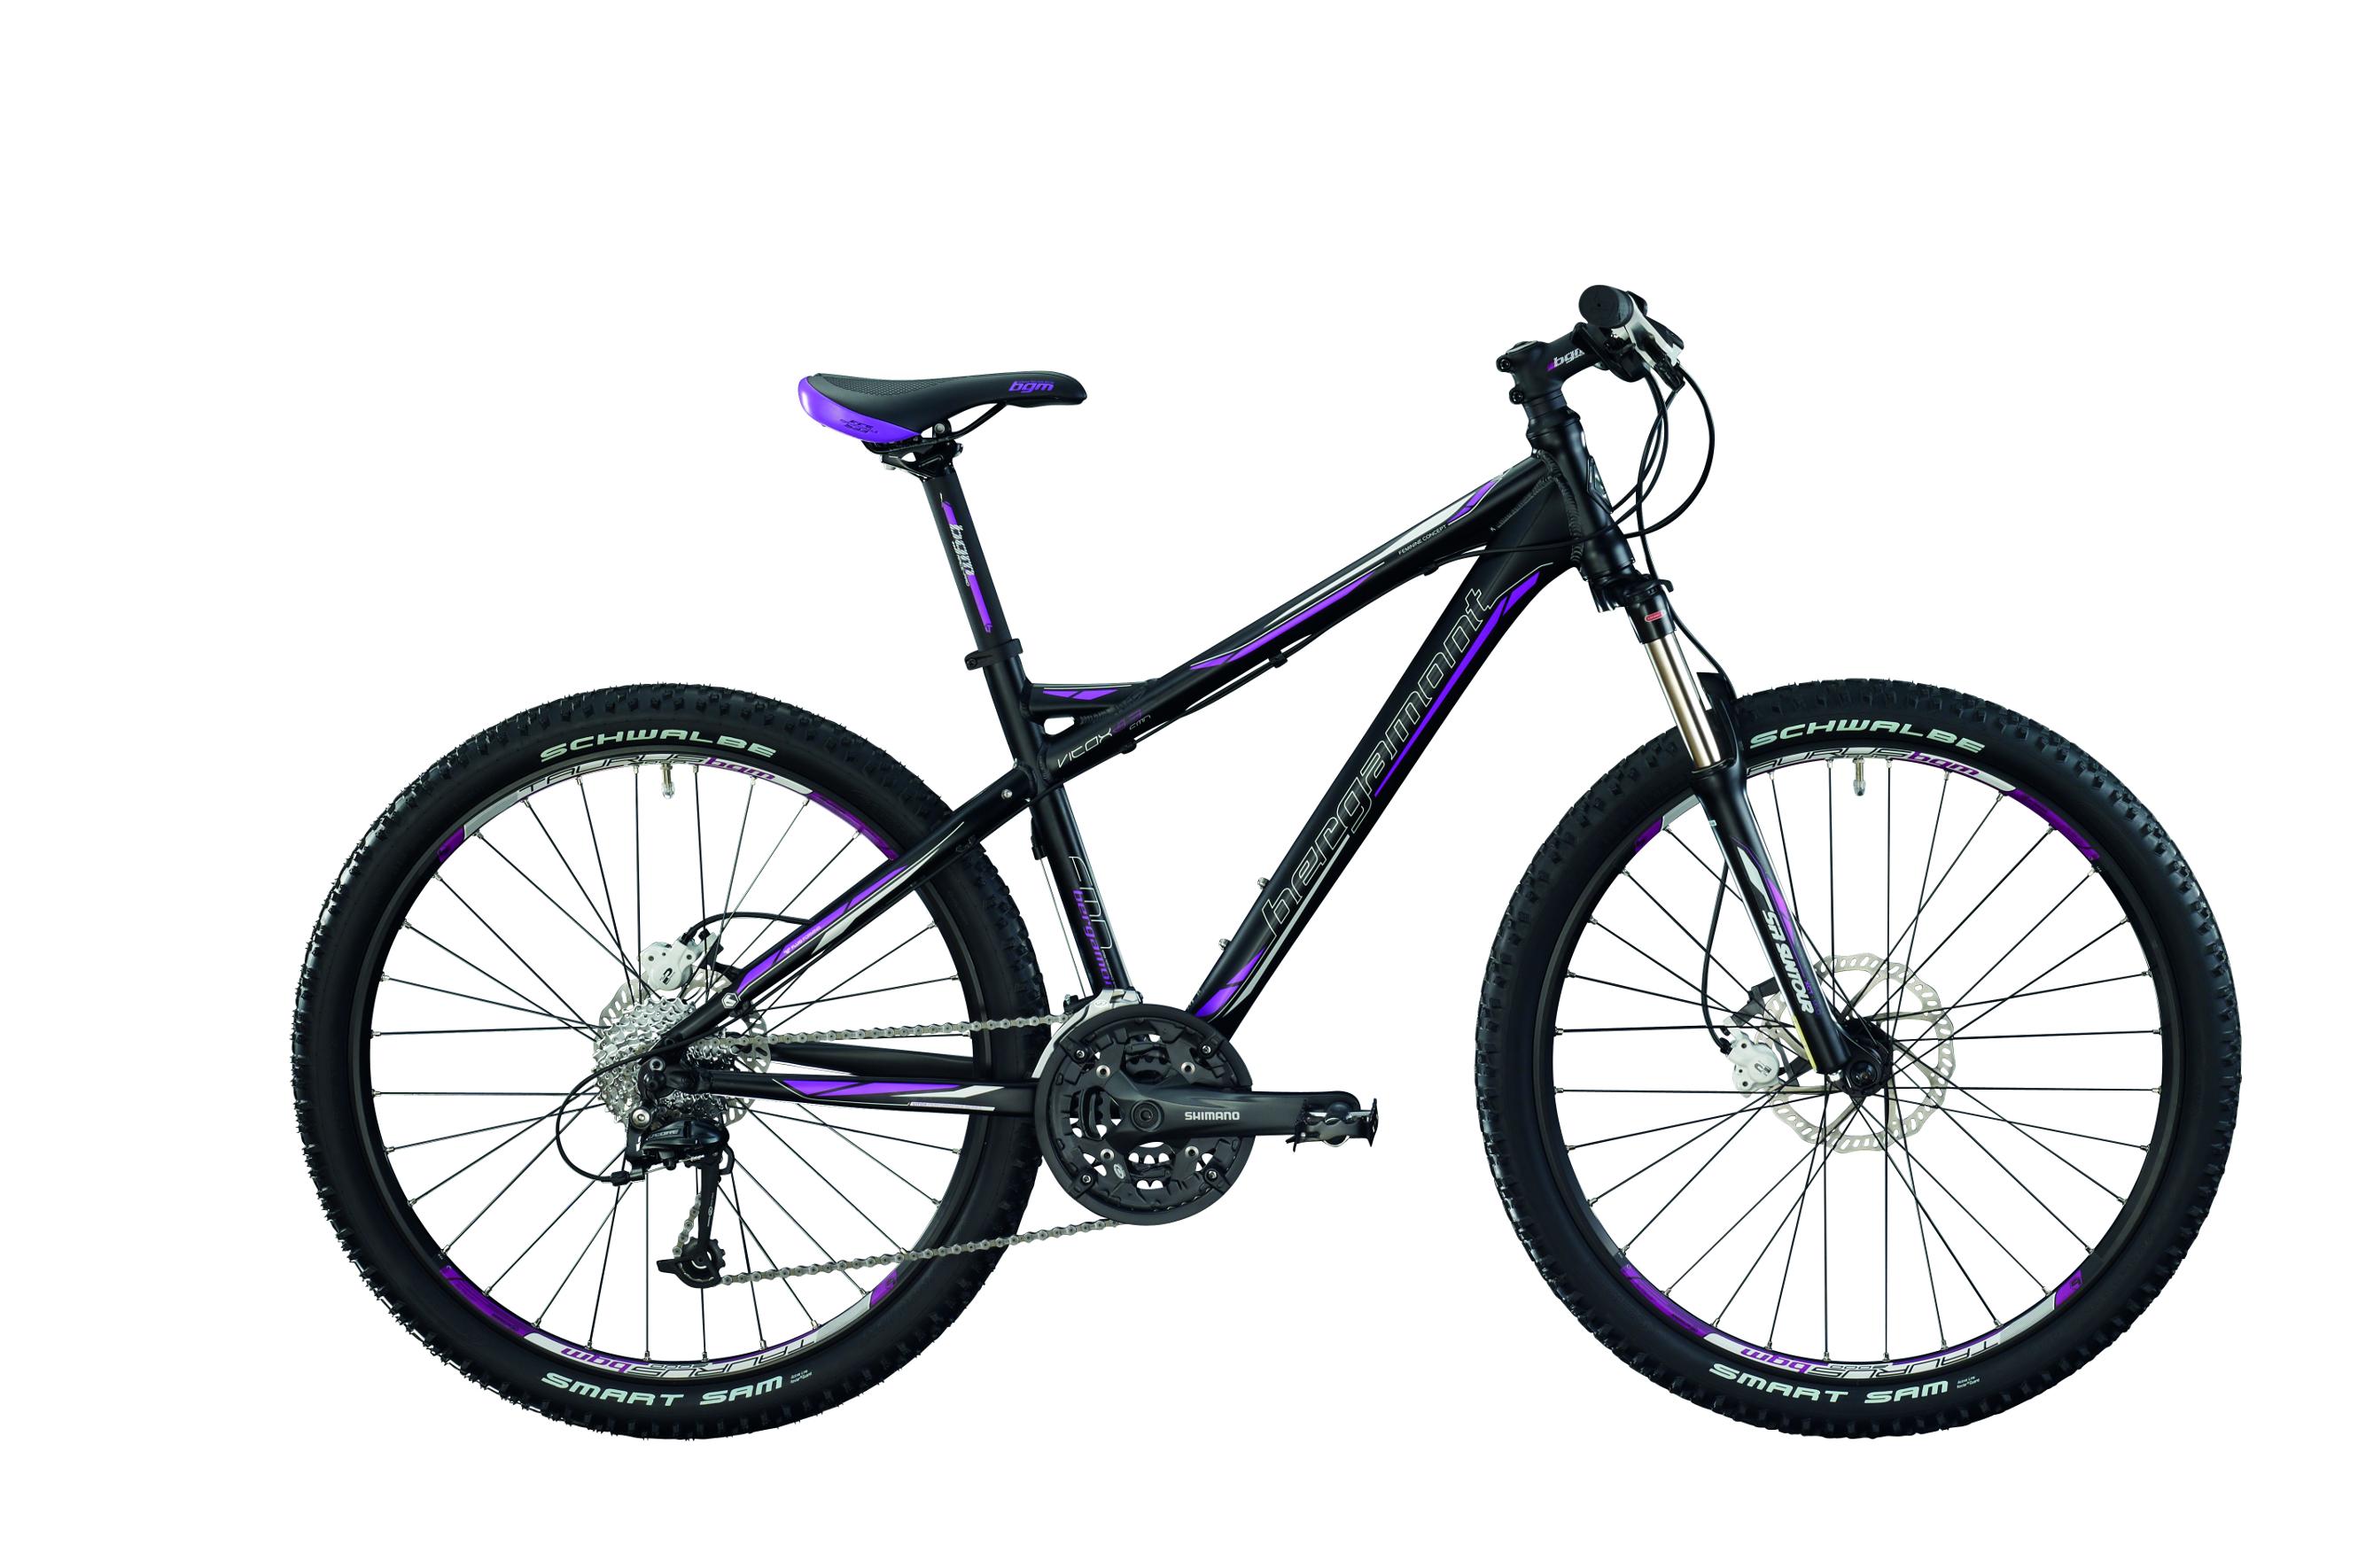 Foto Bicicleta de montaña Bergamont Vitox 8.3 violeta/negro para muje, ...